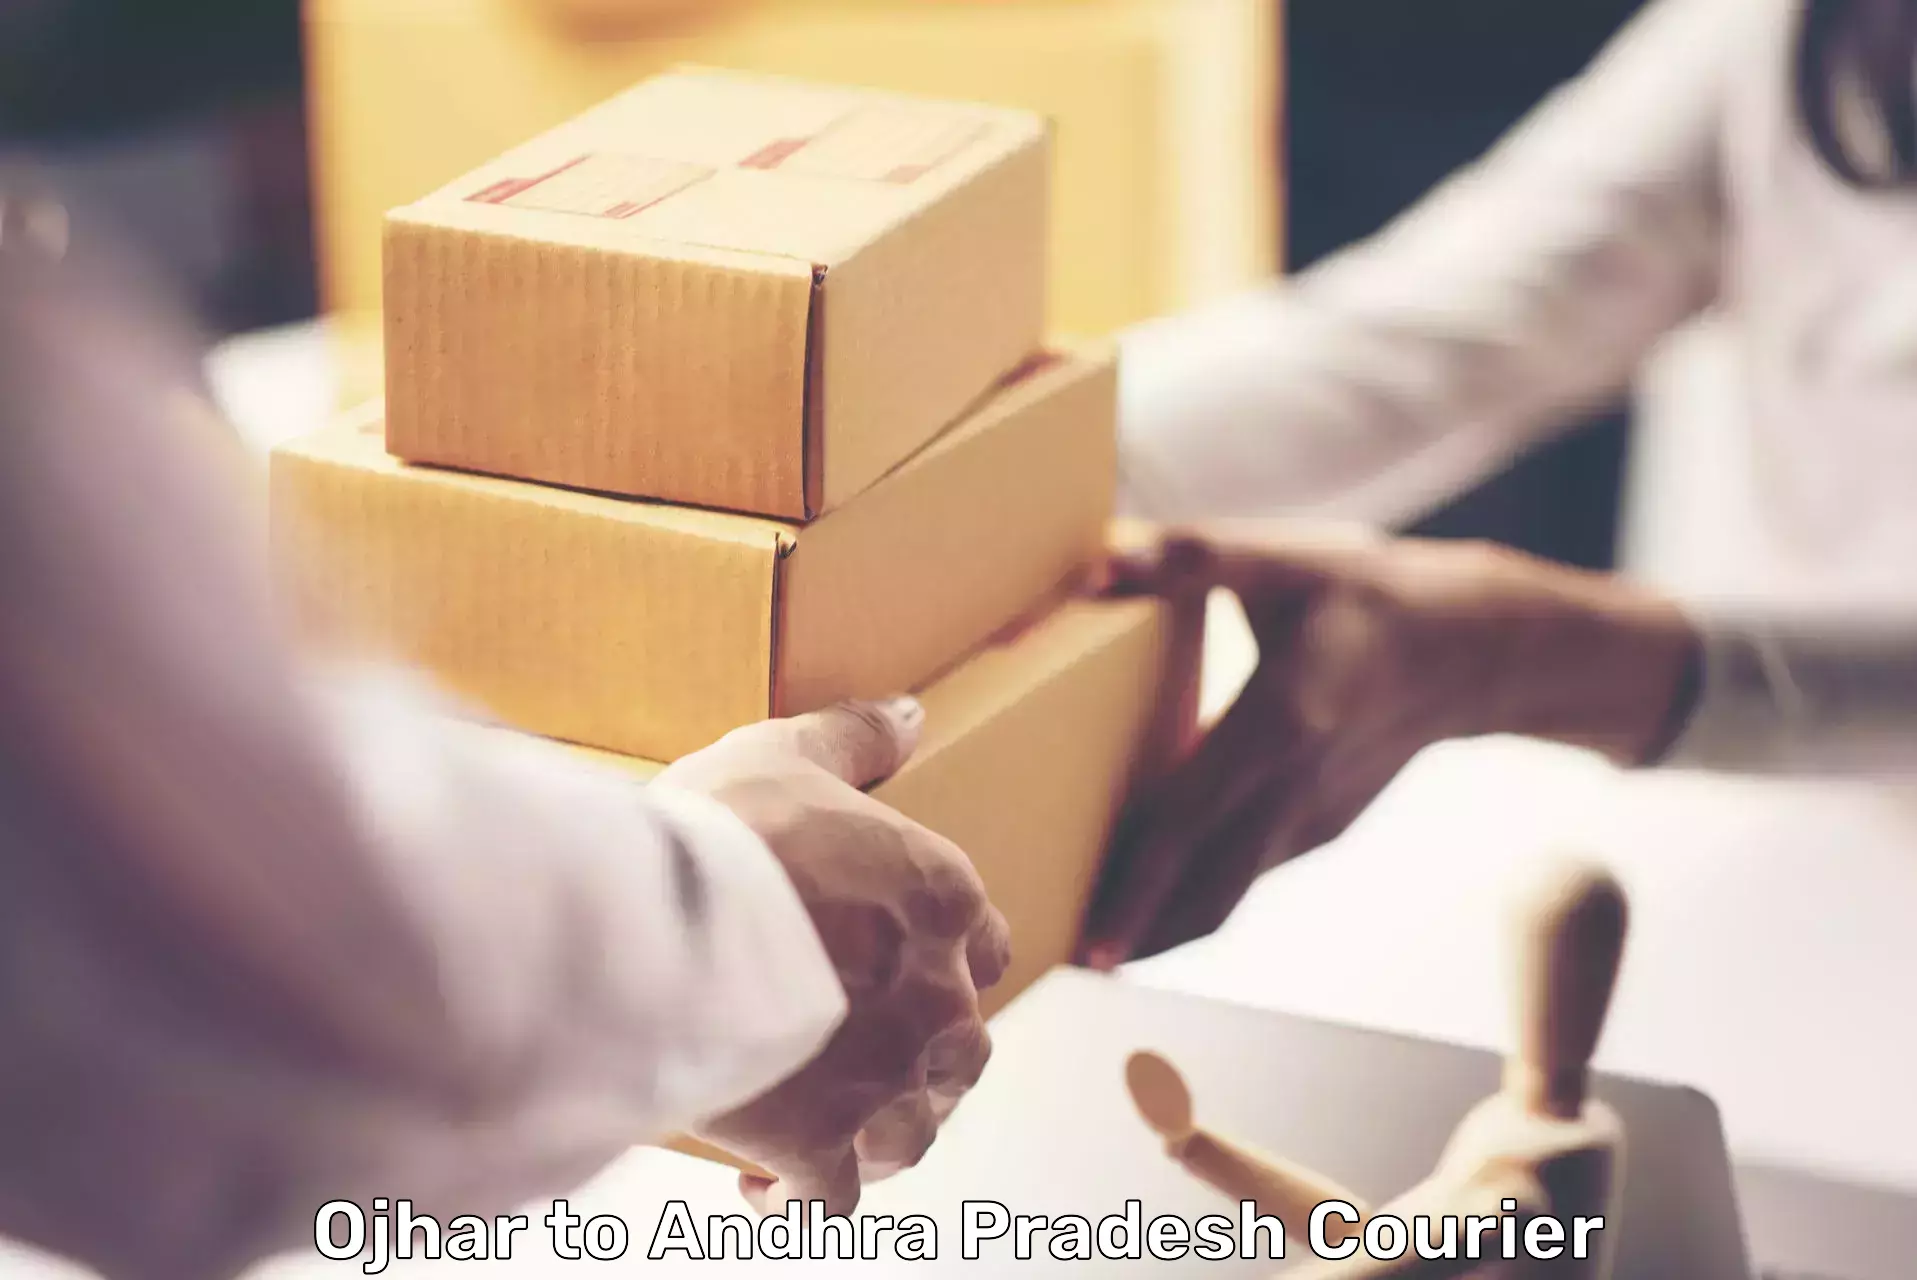 Package delivery network Ojhar to Puttur Tirupati